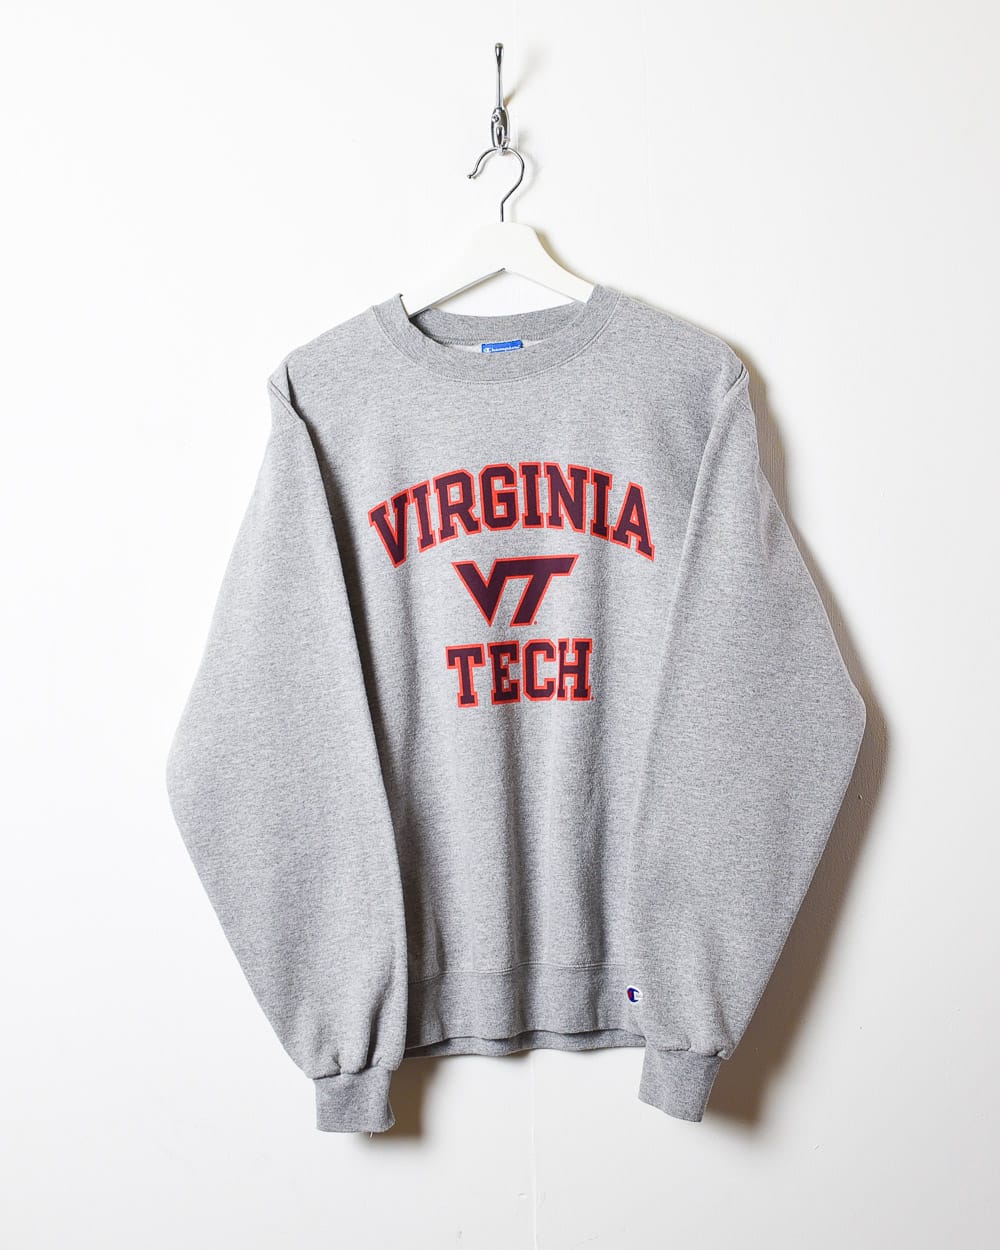 Vintage 10s+ Stone Champion Virginia Tech Sweatshirt - Small